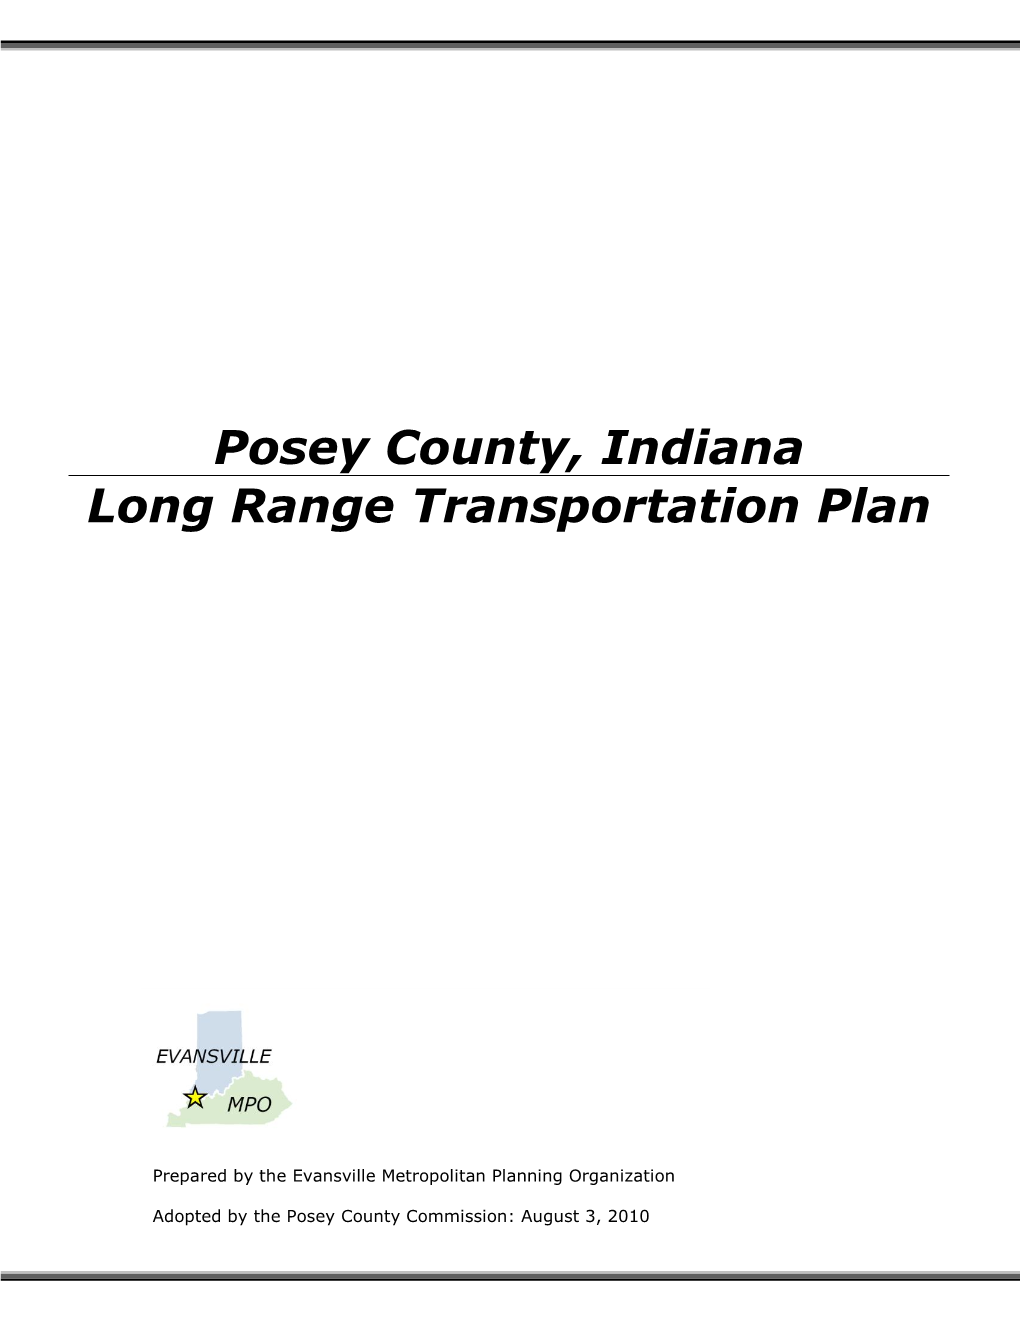 Posey County, Indiana Long Range Transportation Plan